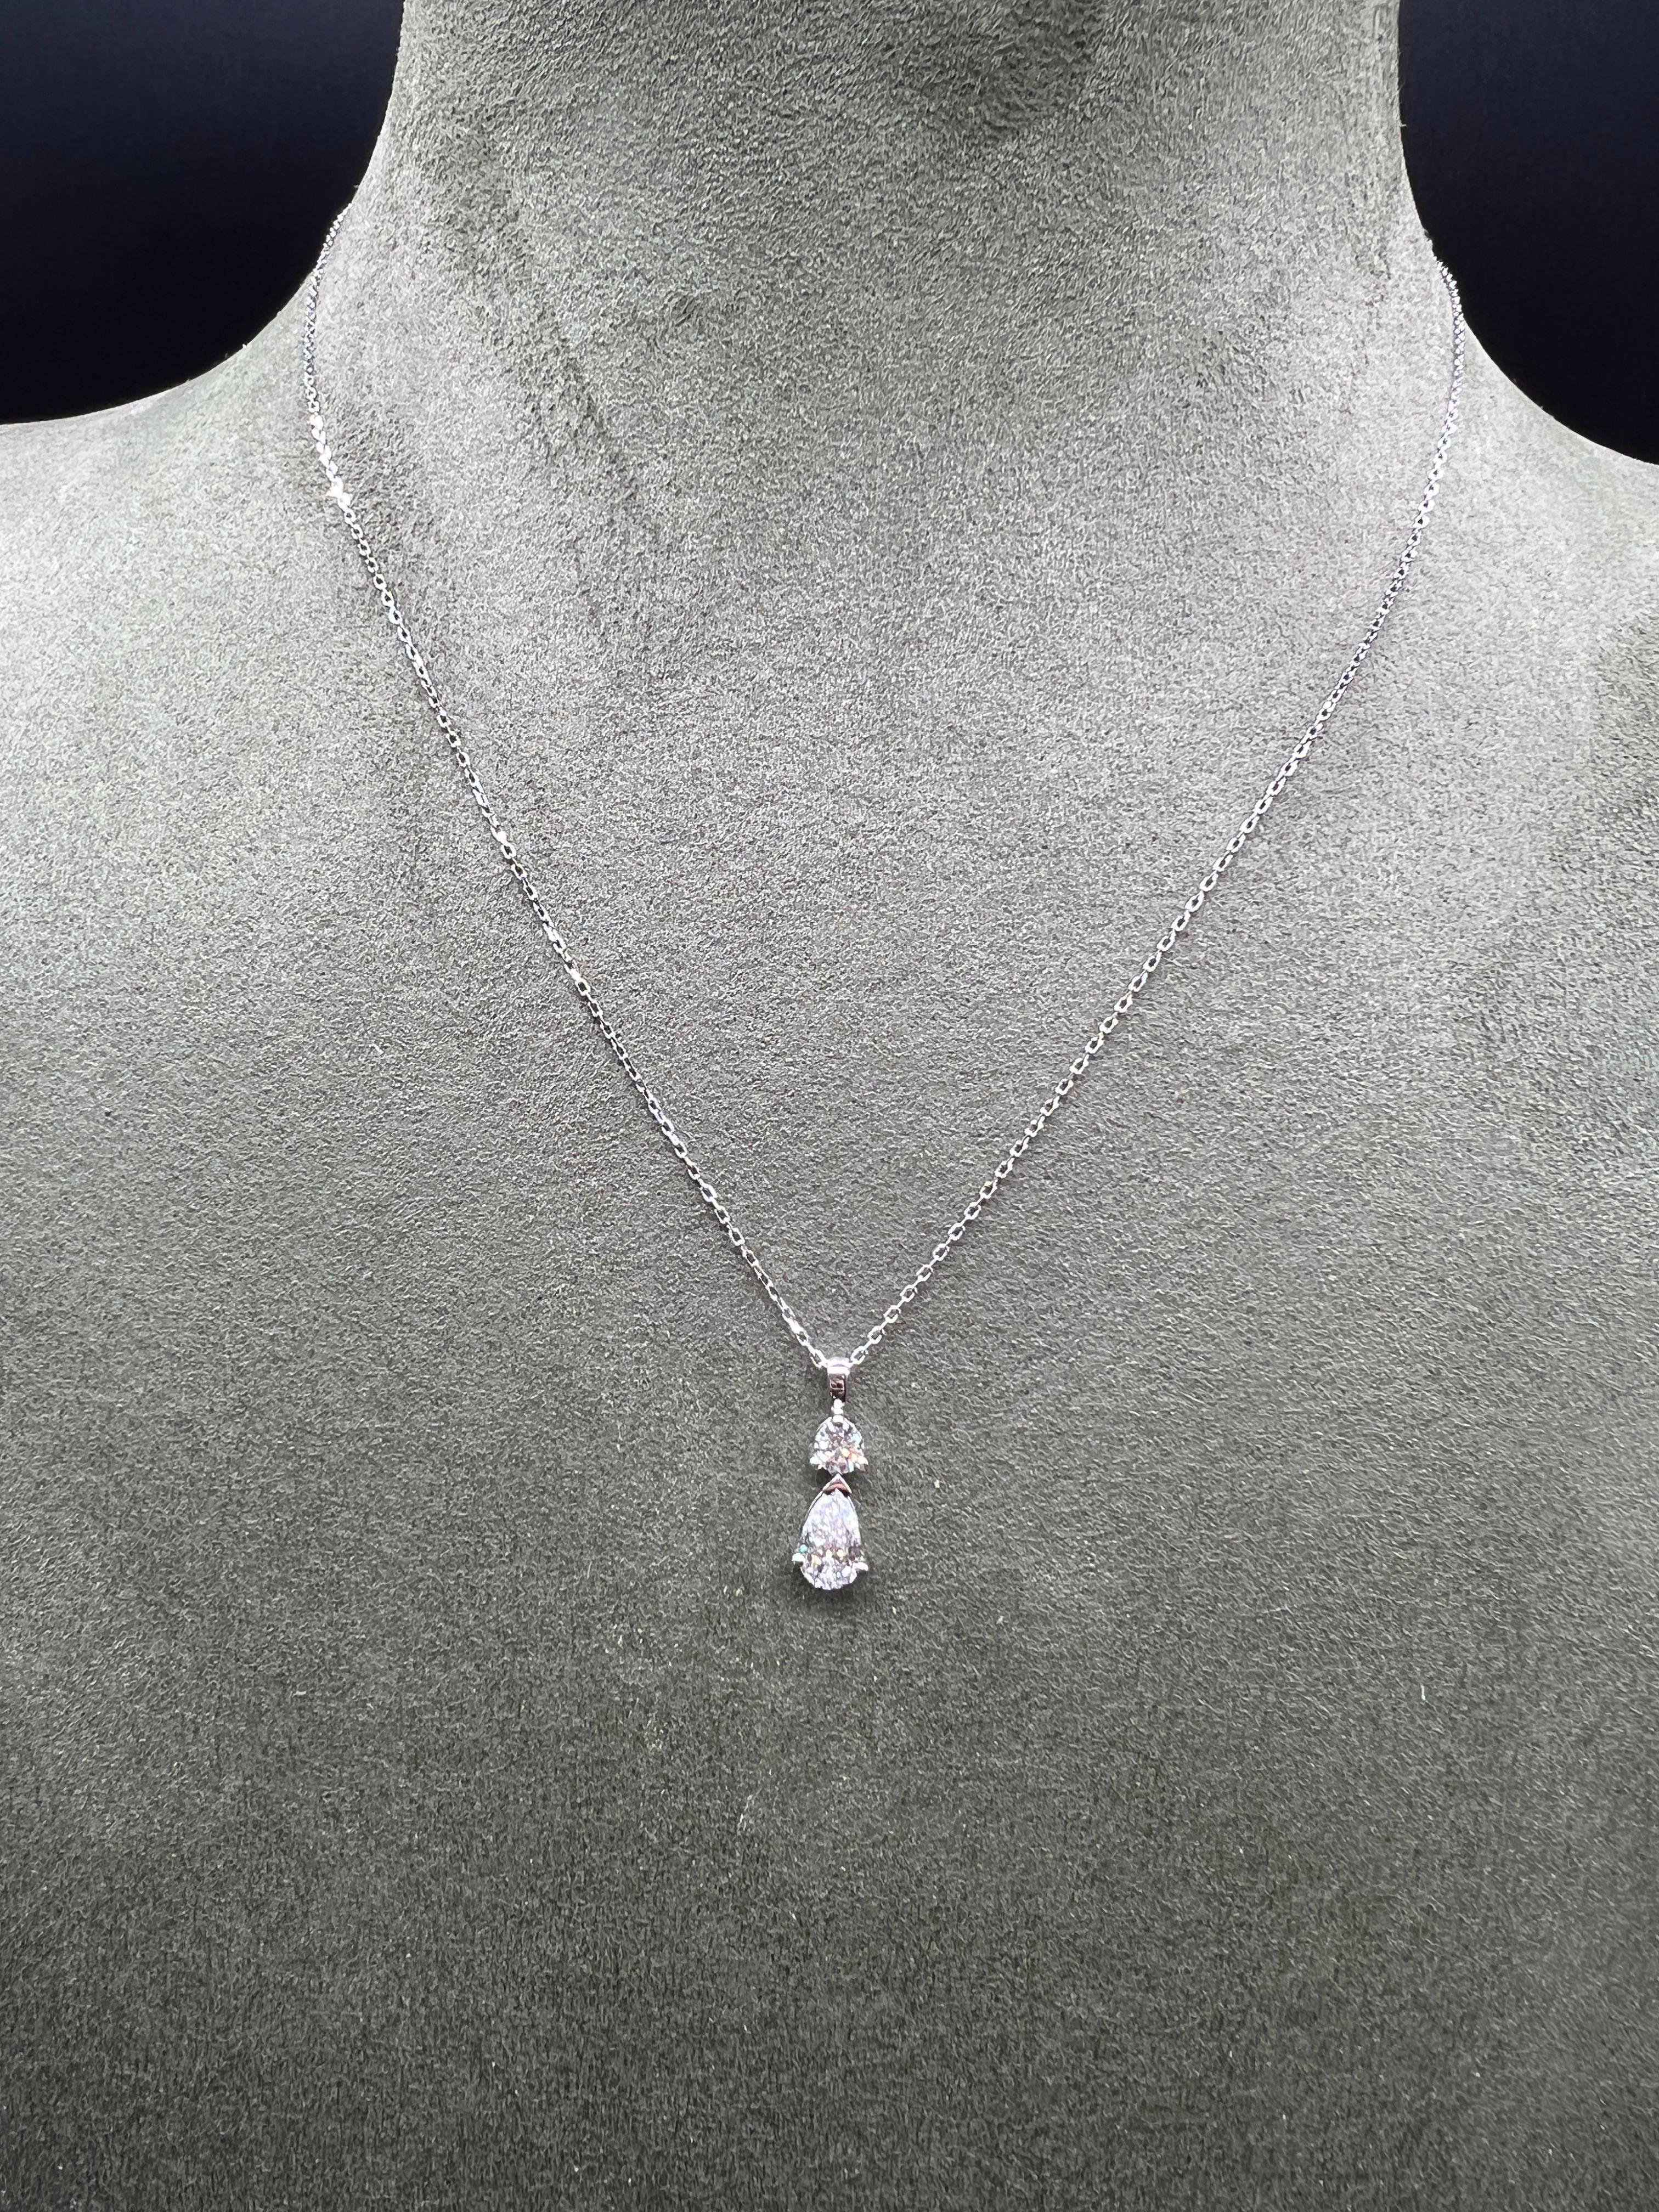 Pendant Necklace White Gold Diamond For Sale 1